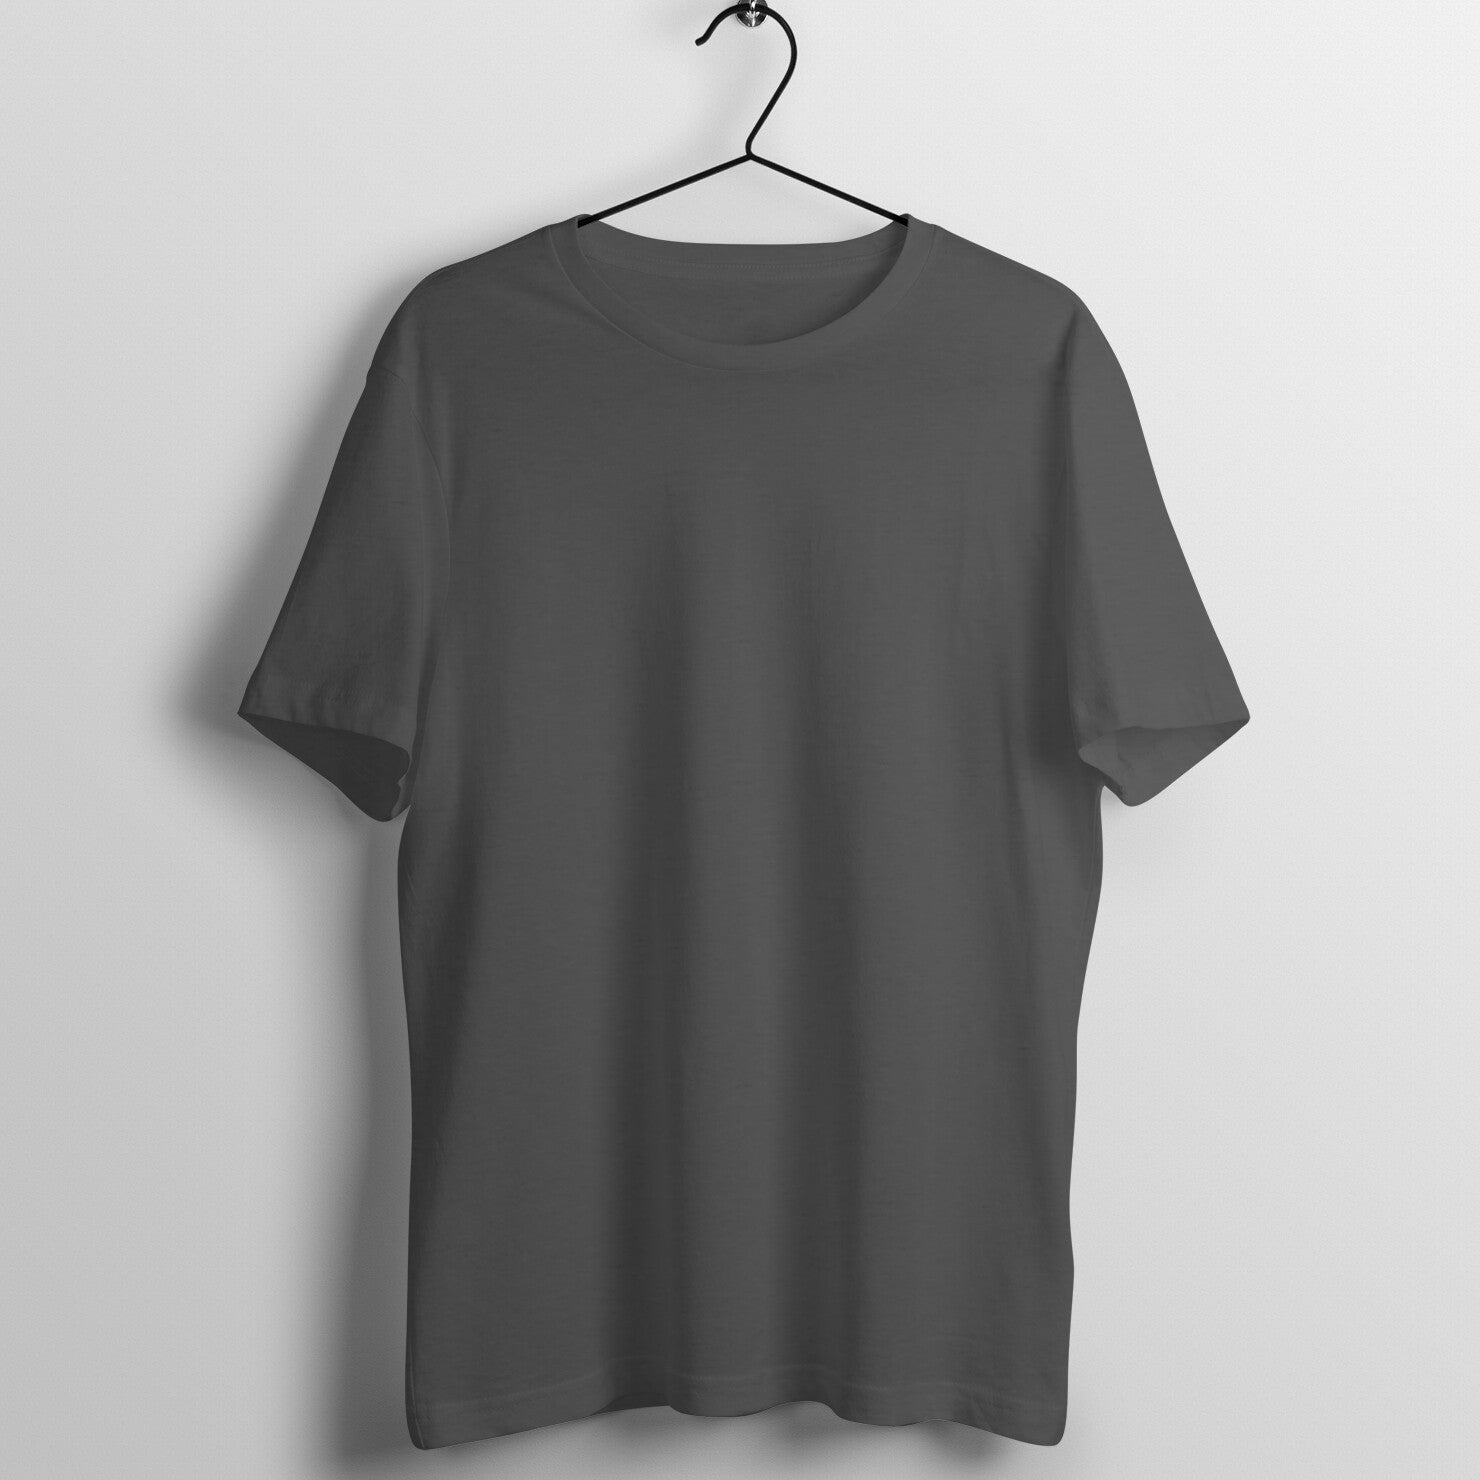 Men's Charcoal Grey T-shirt